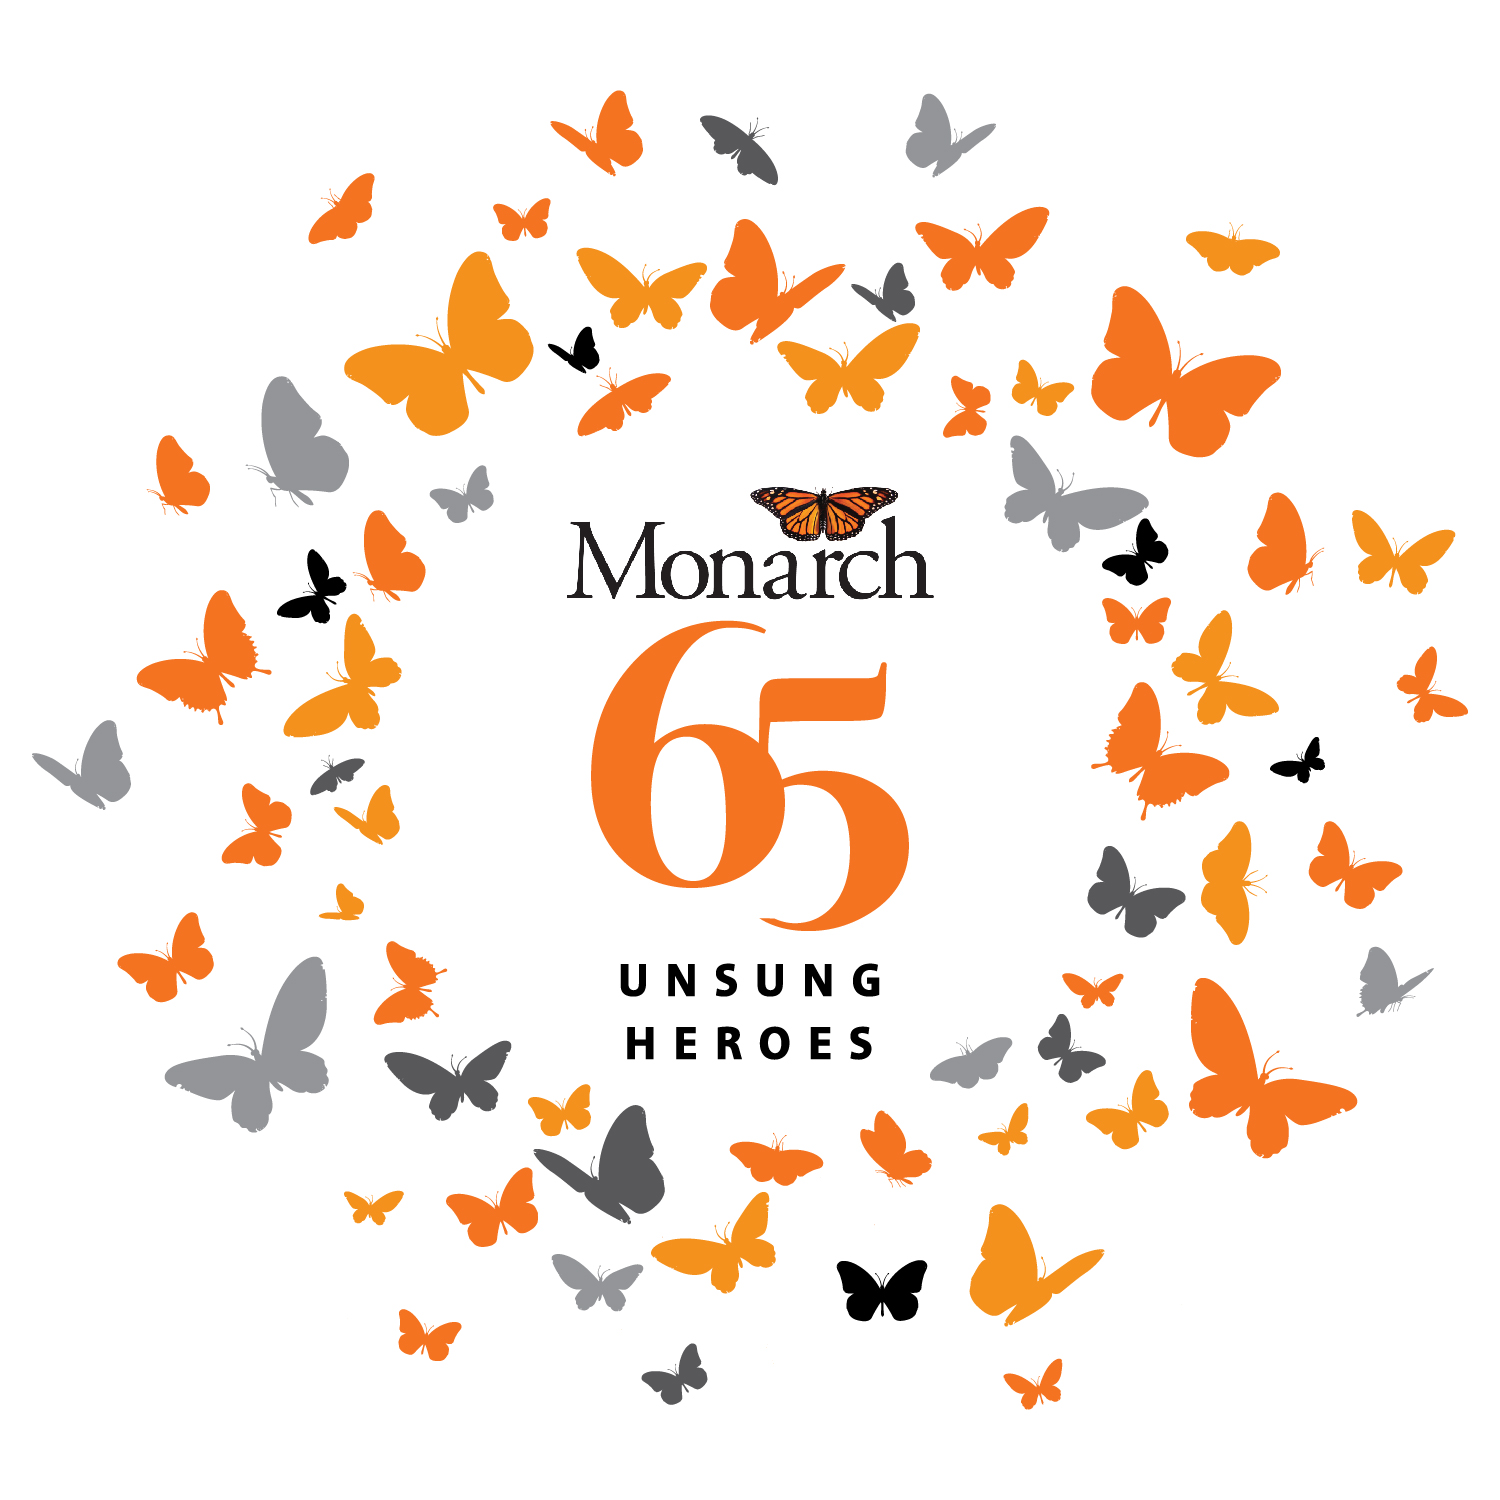 Gray and orange butterflies around a 65th Monarch anniversary logo